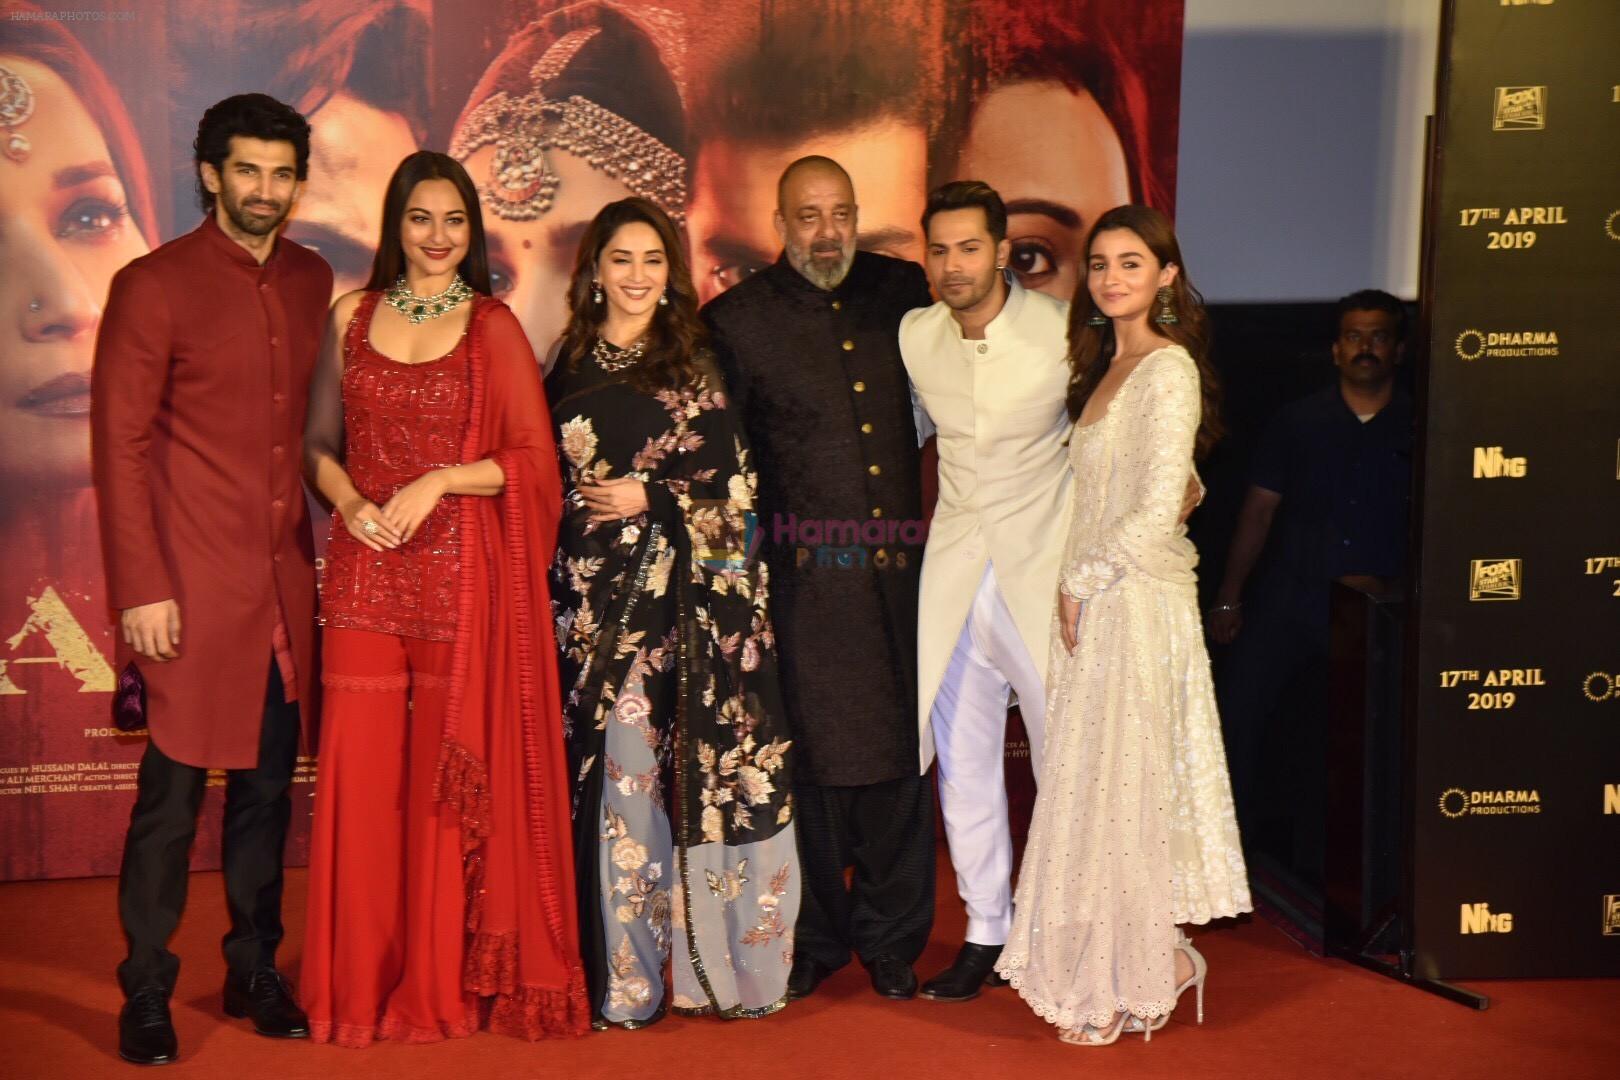 Alia Bhatt, Varun Dhawan, Sanjay Dutt, Sonakshi Sinha, Aditya Roy Kapoor, Madhuri Dixit at the Teaser launch of KALANK on 11th March 2019